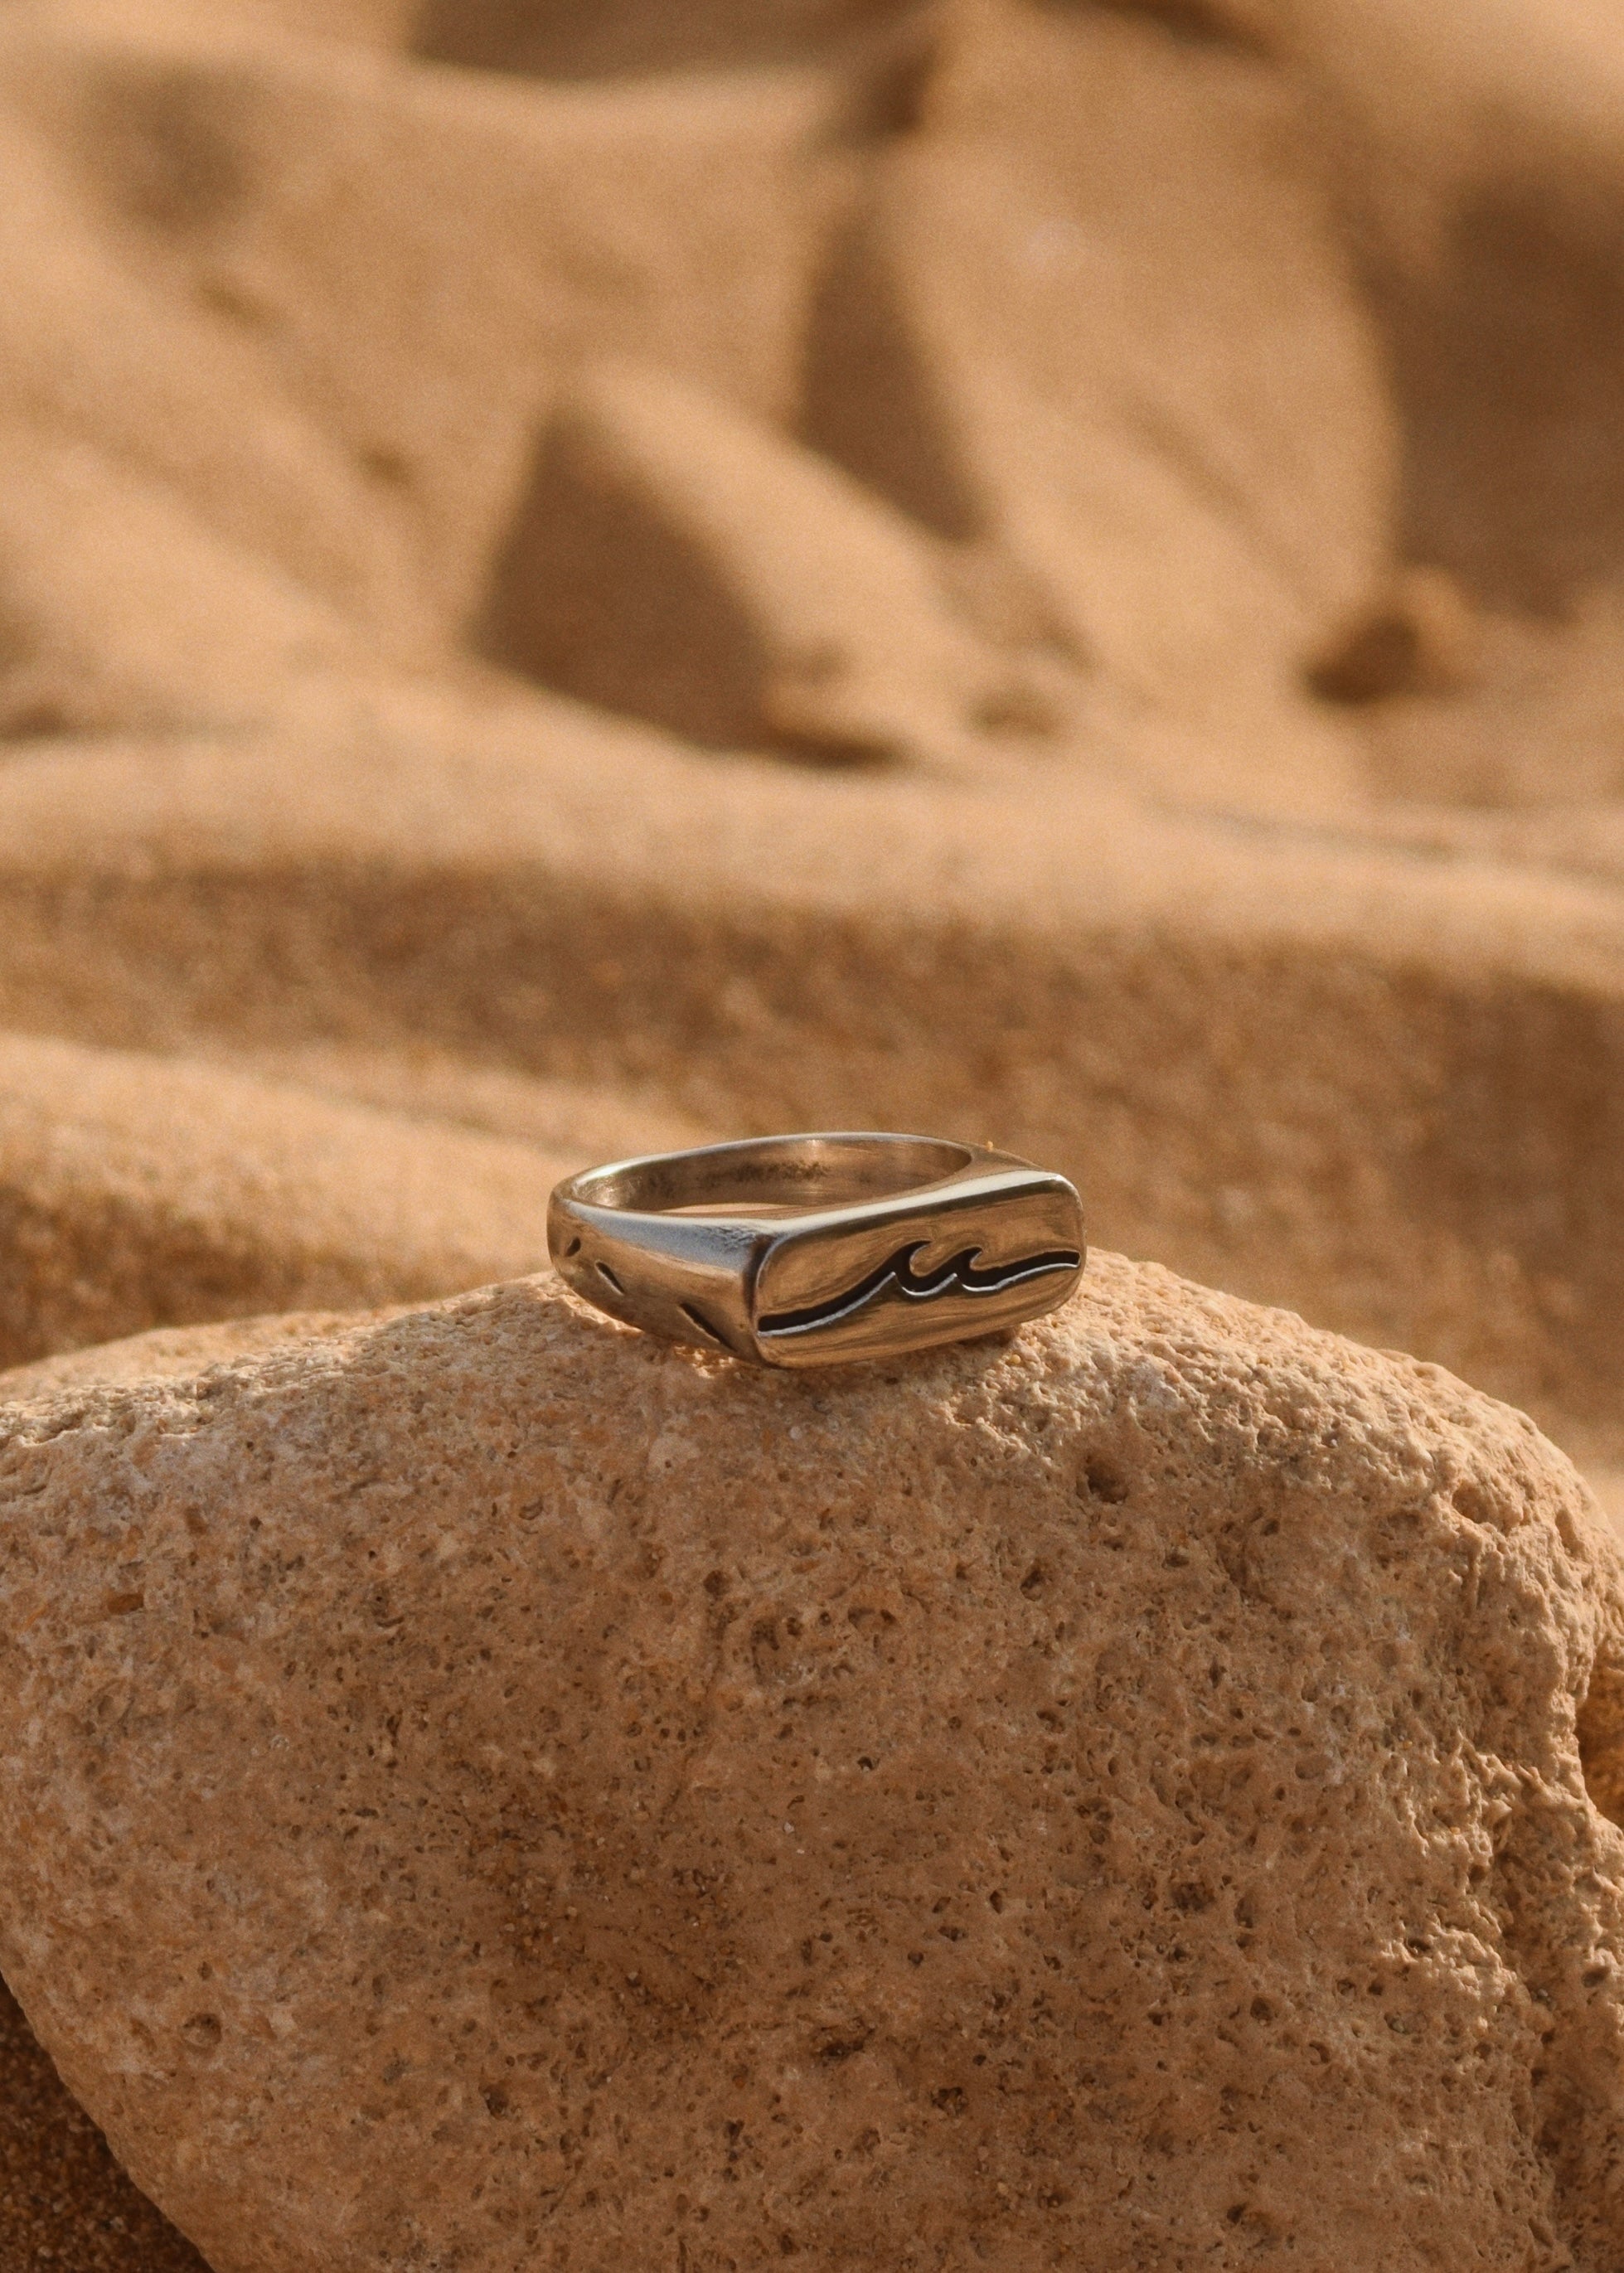 Seashell Marine Ring Sterling Silver Beach Themed Wedding Ring